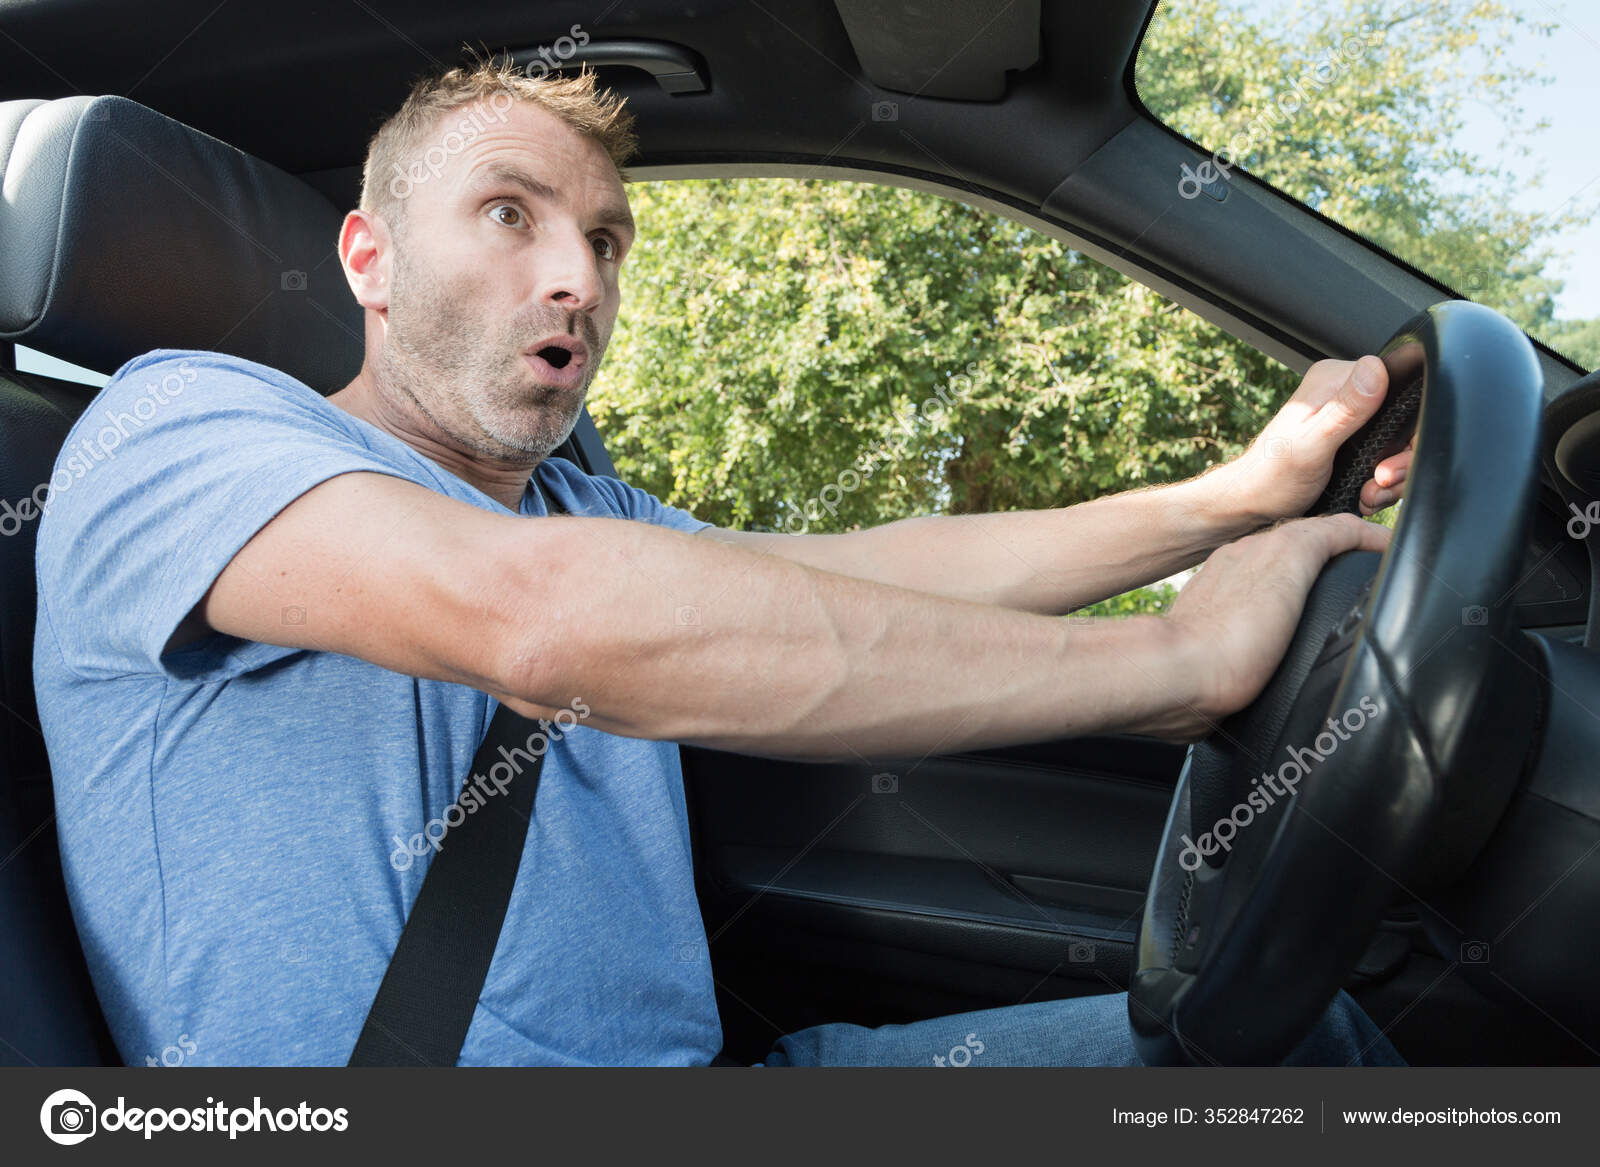 https://st3.depositphotos.com/1192060/35284/i/1600/depositphotos_352847262-stock-photo-angry-driver-honking-car.jpg